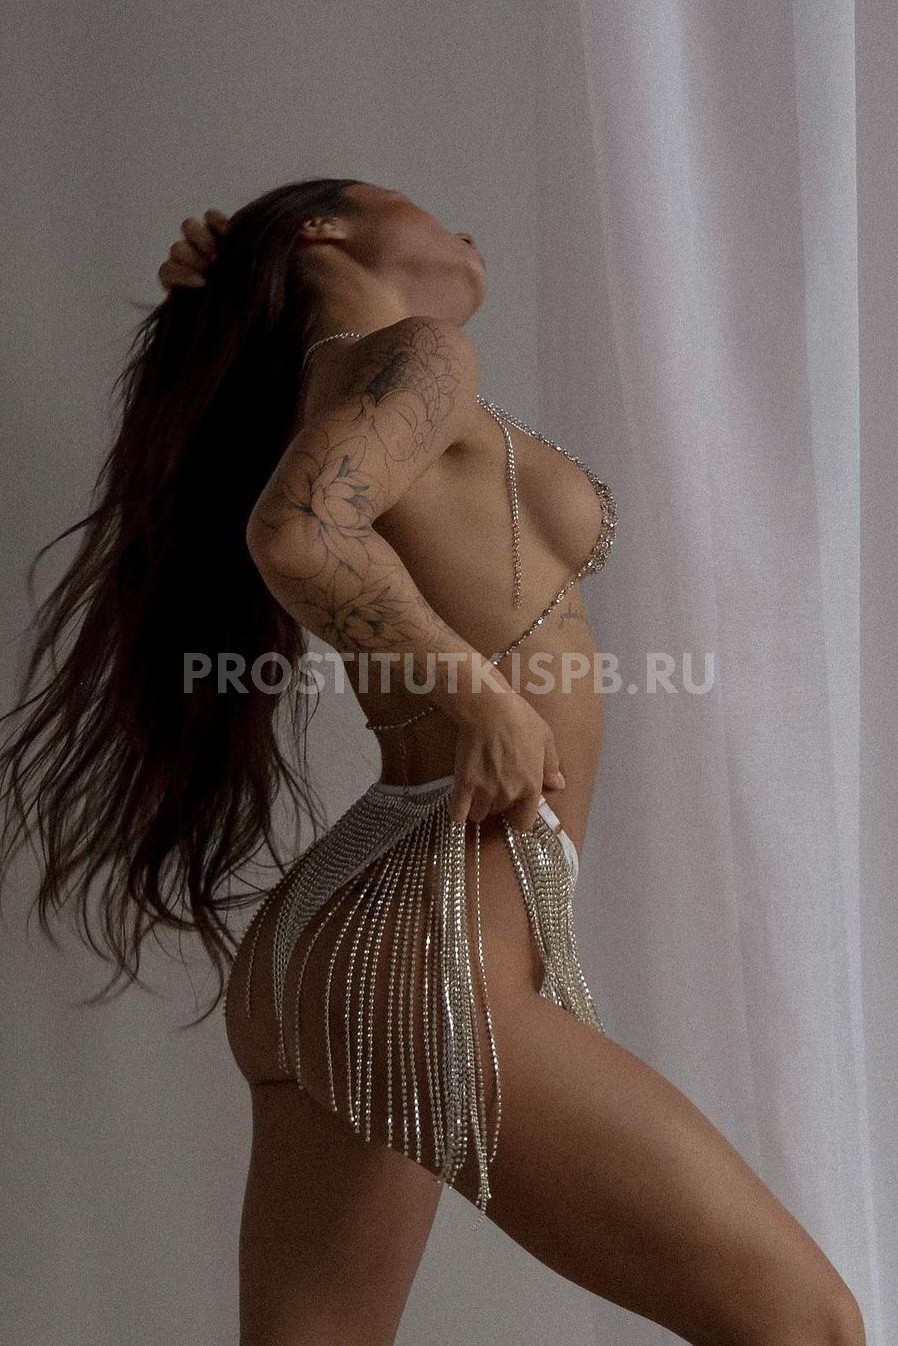 ПроституткаTaya27000 рублей/час – фото3